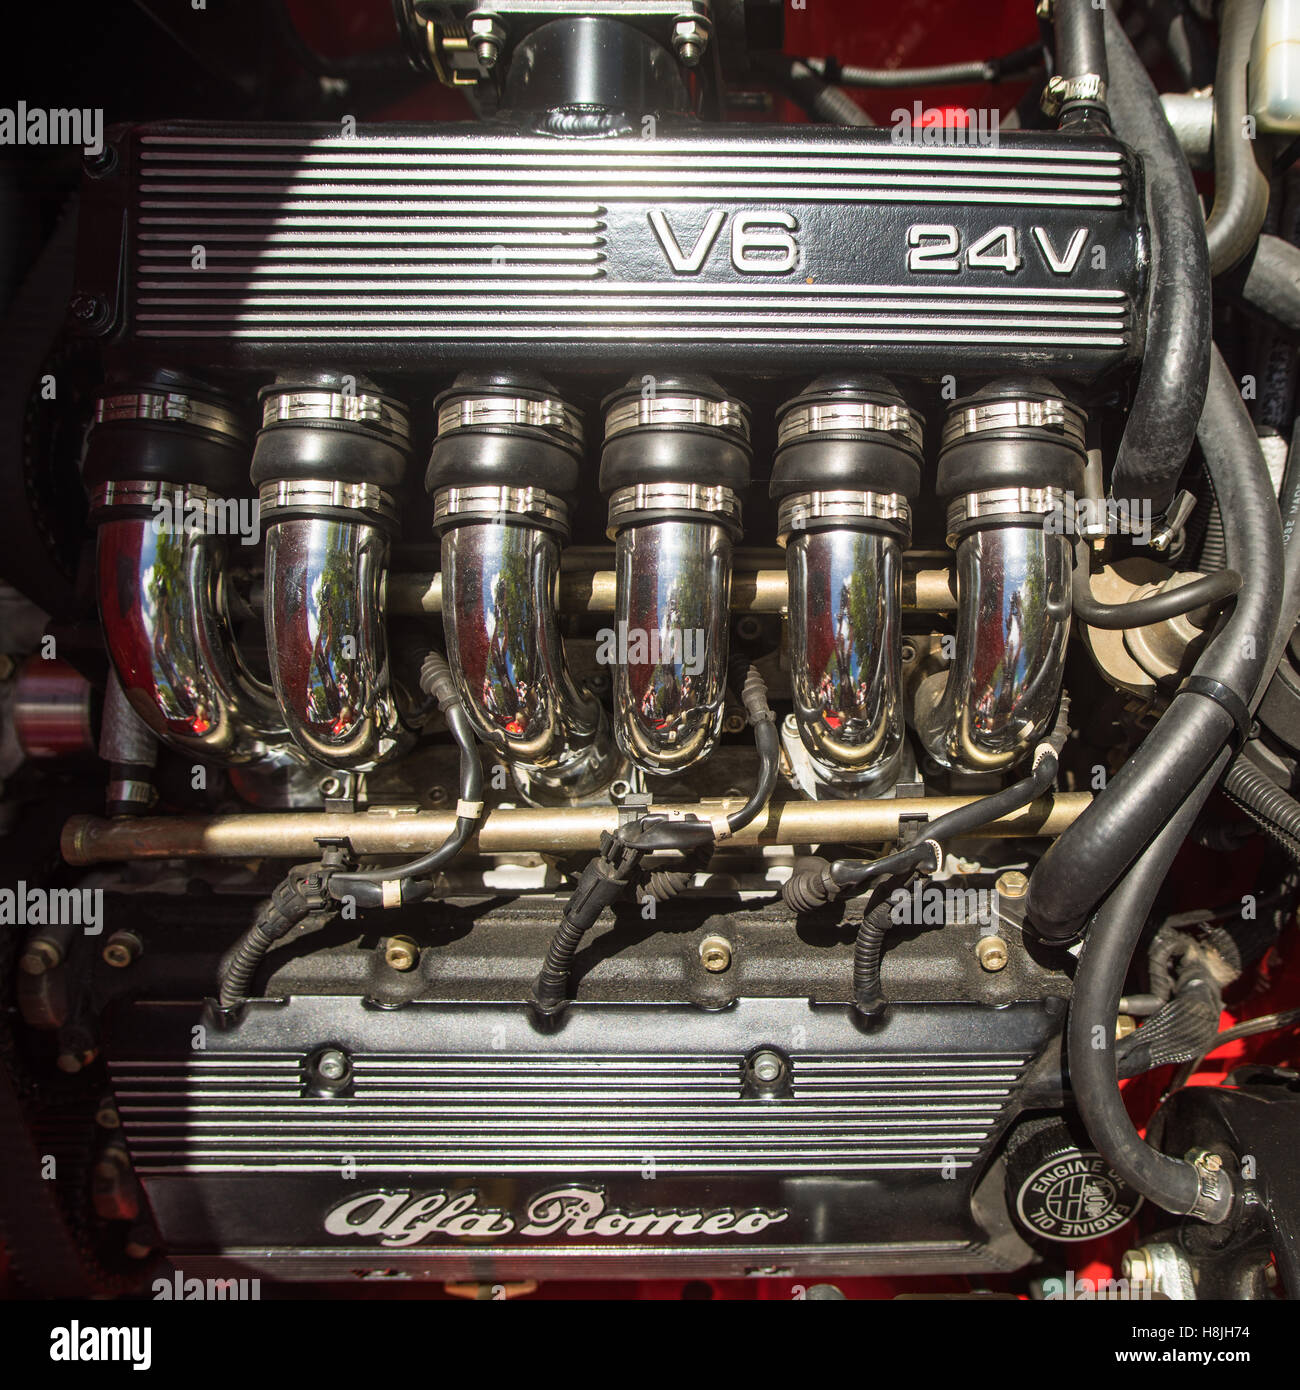 Alfa romeo v6 engine hi-res stock photography and images - Alamy